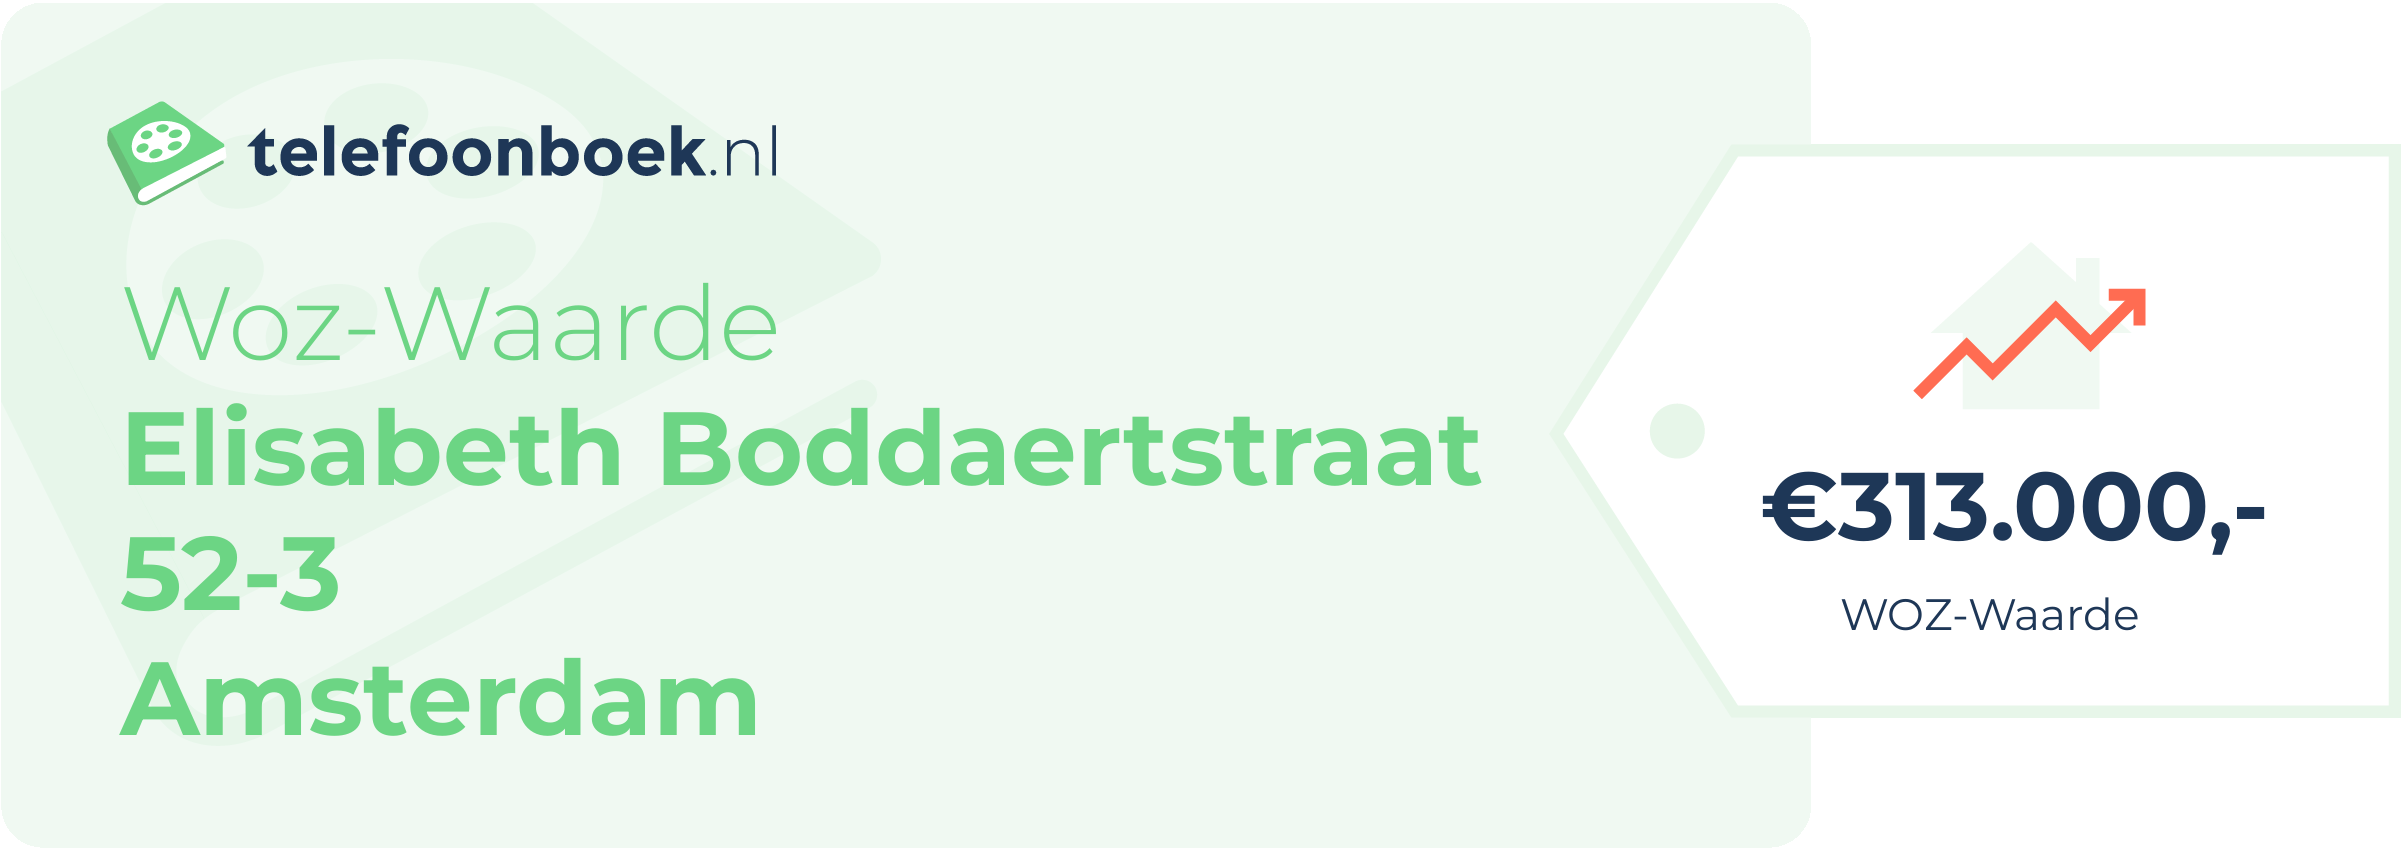 WOZ-waarde Elisabeth Boddaertstraat 52-3 Amsterdam